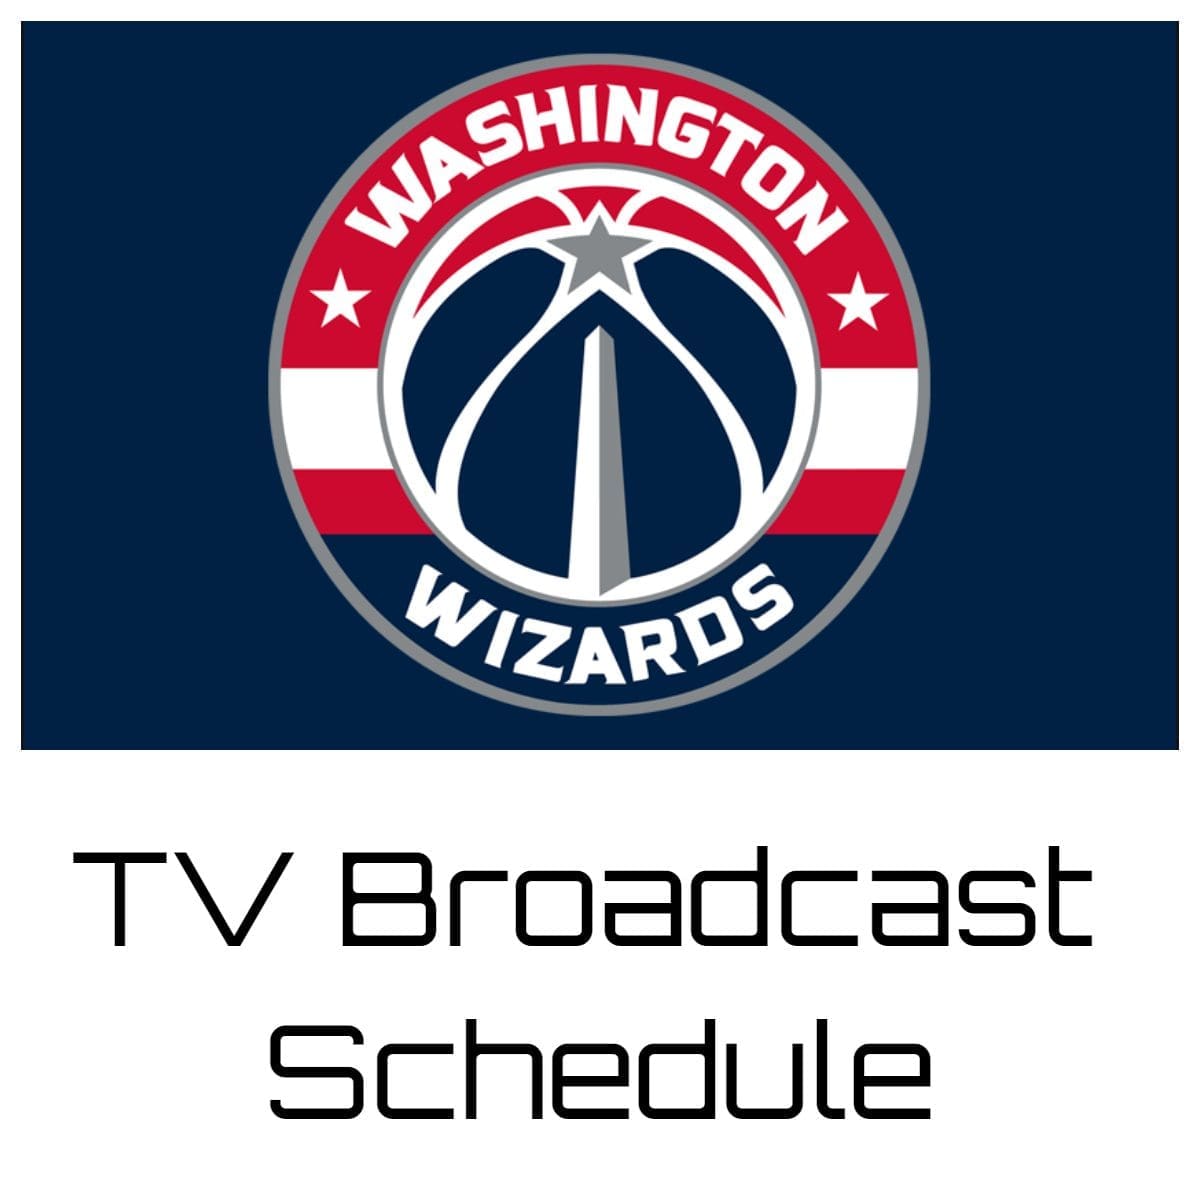 Washington Wizards TV Broadcast Schedule